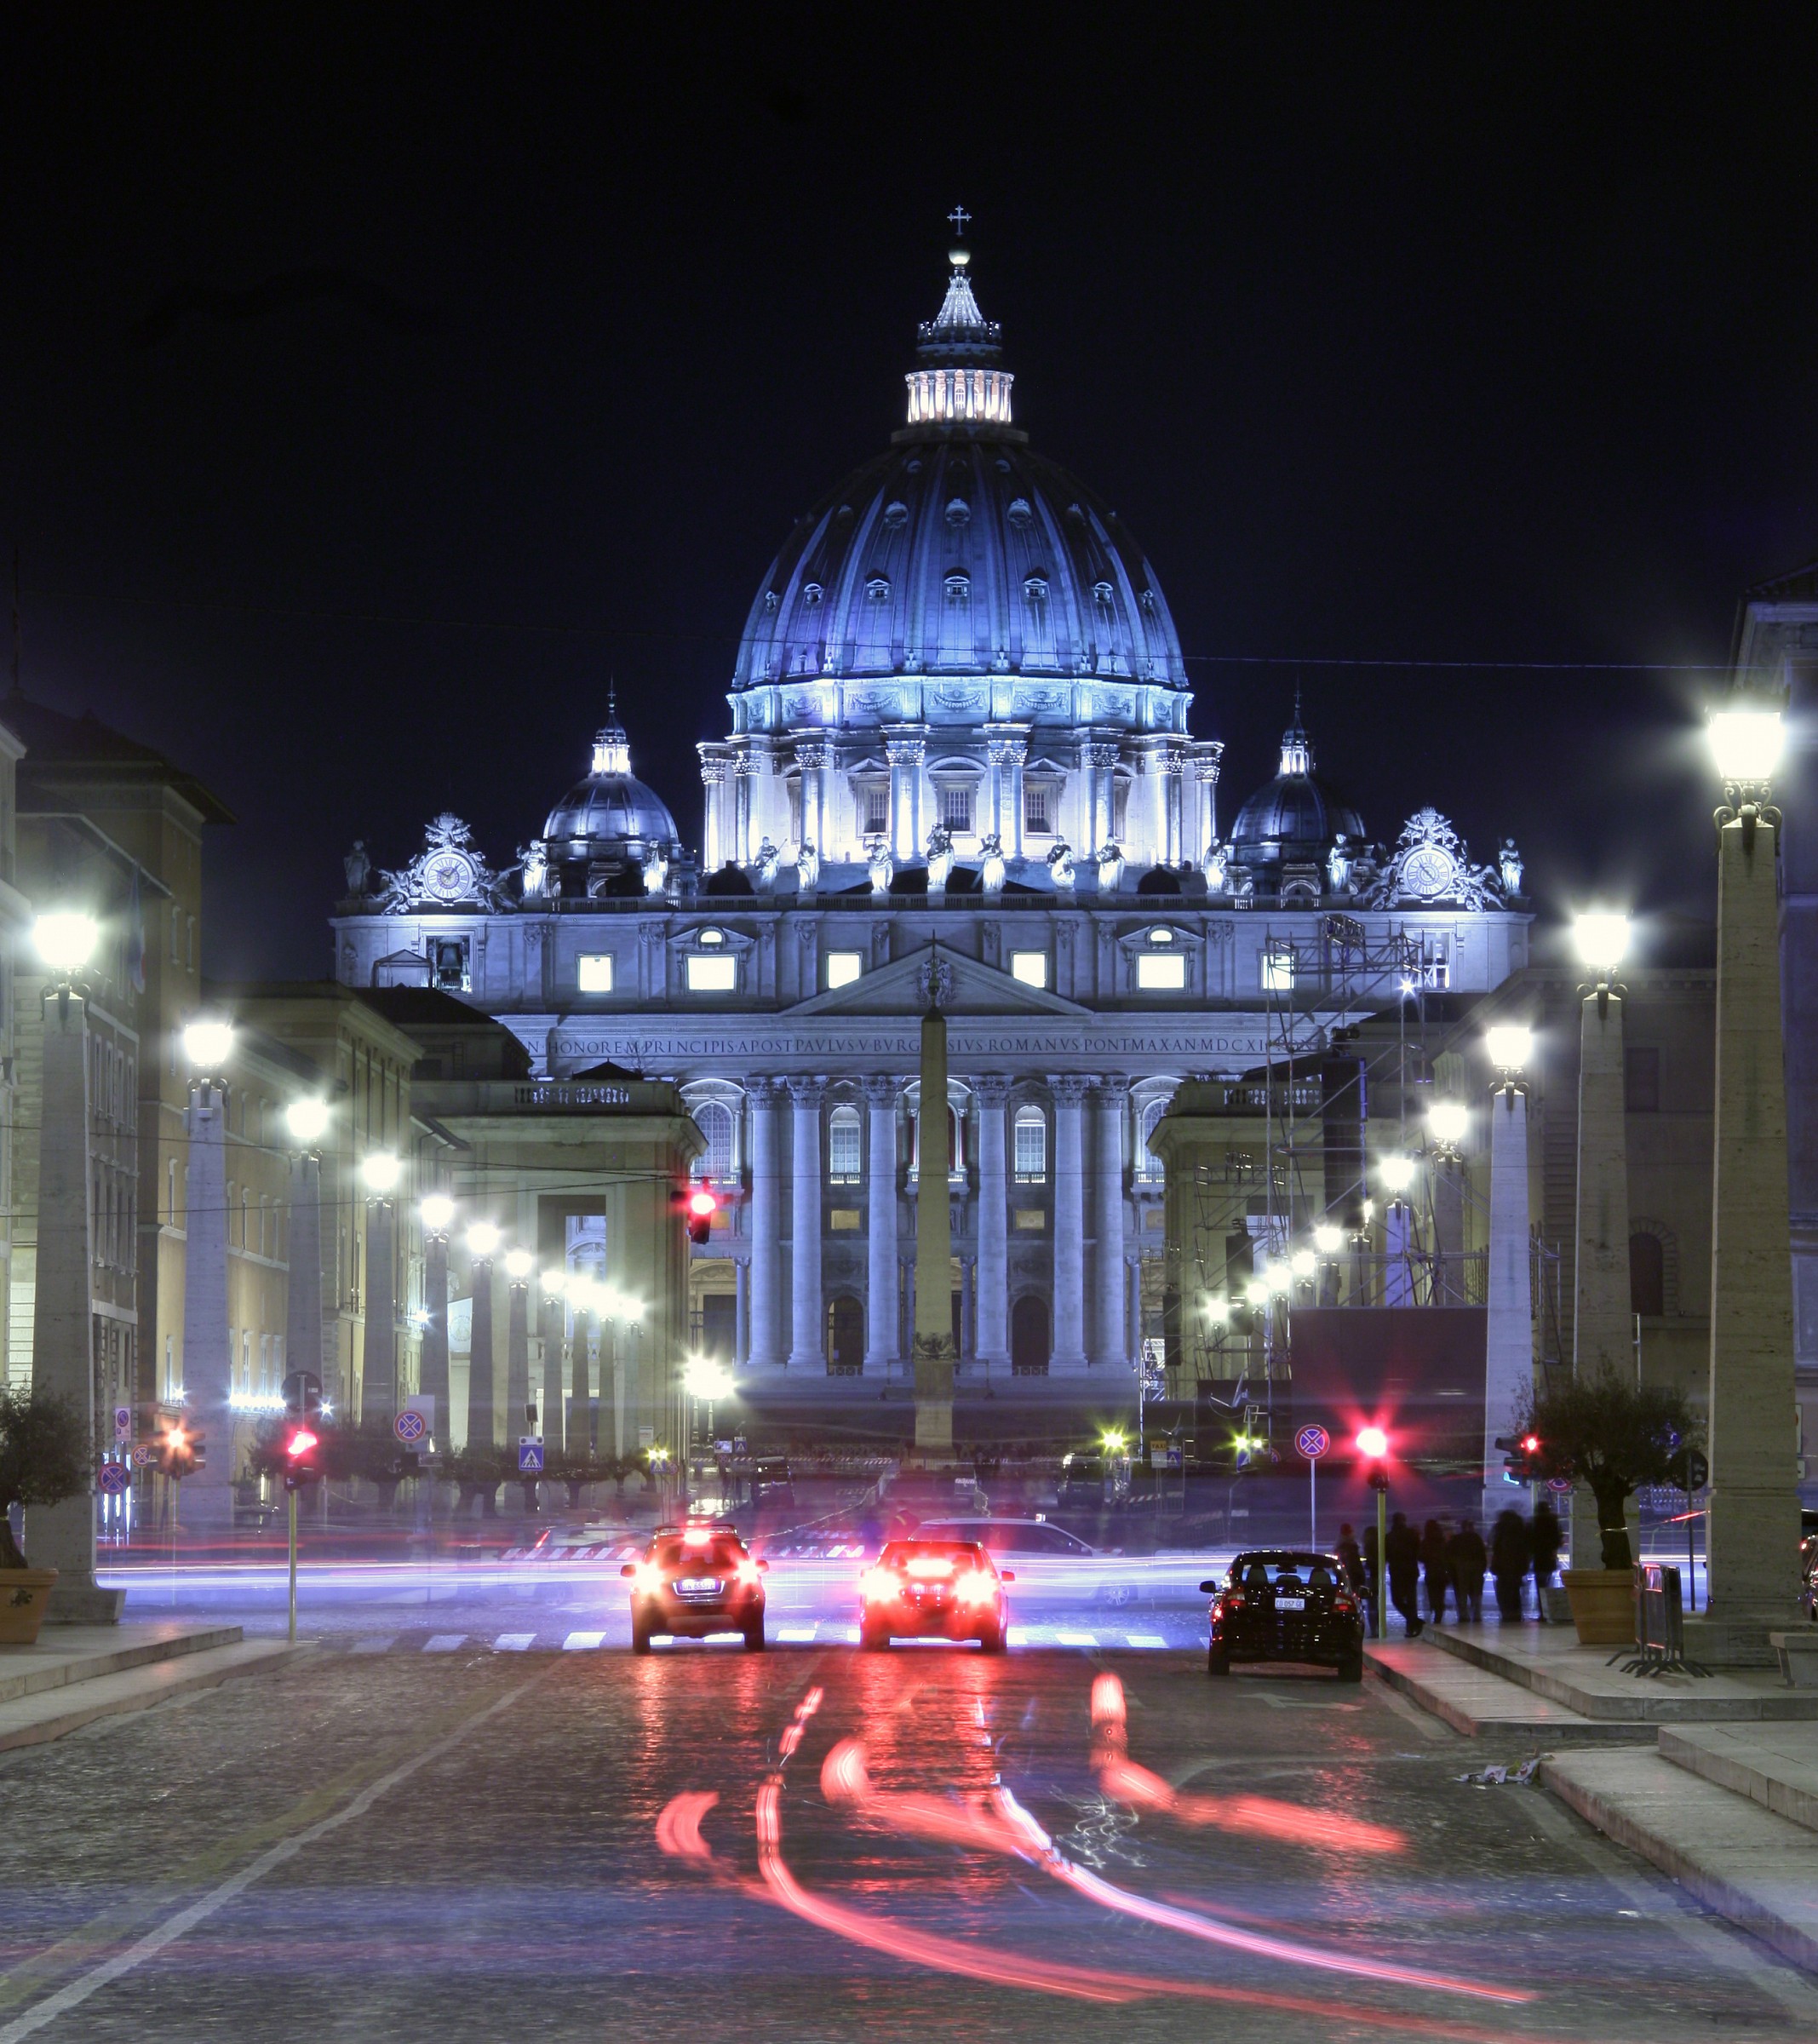 St. Peter's Basilica at night...